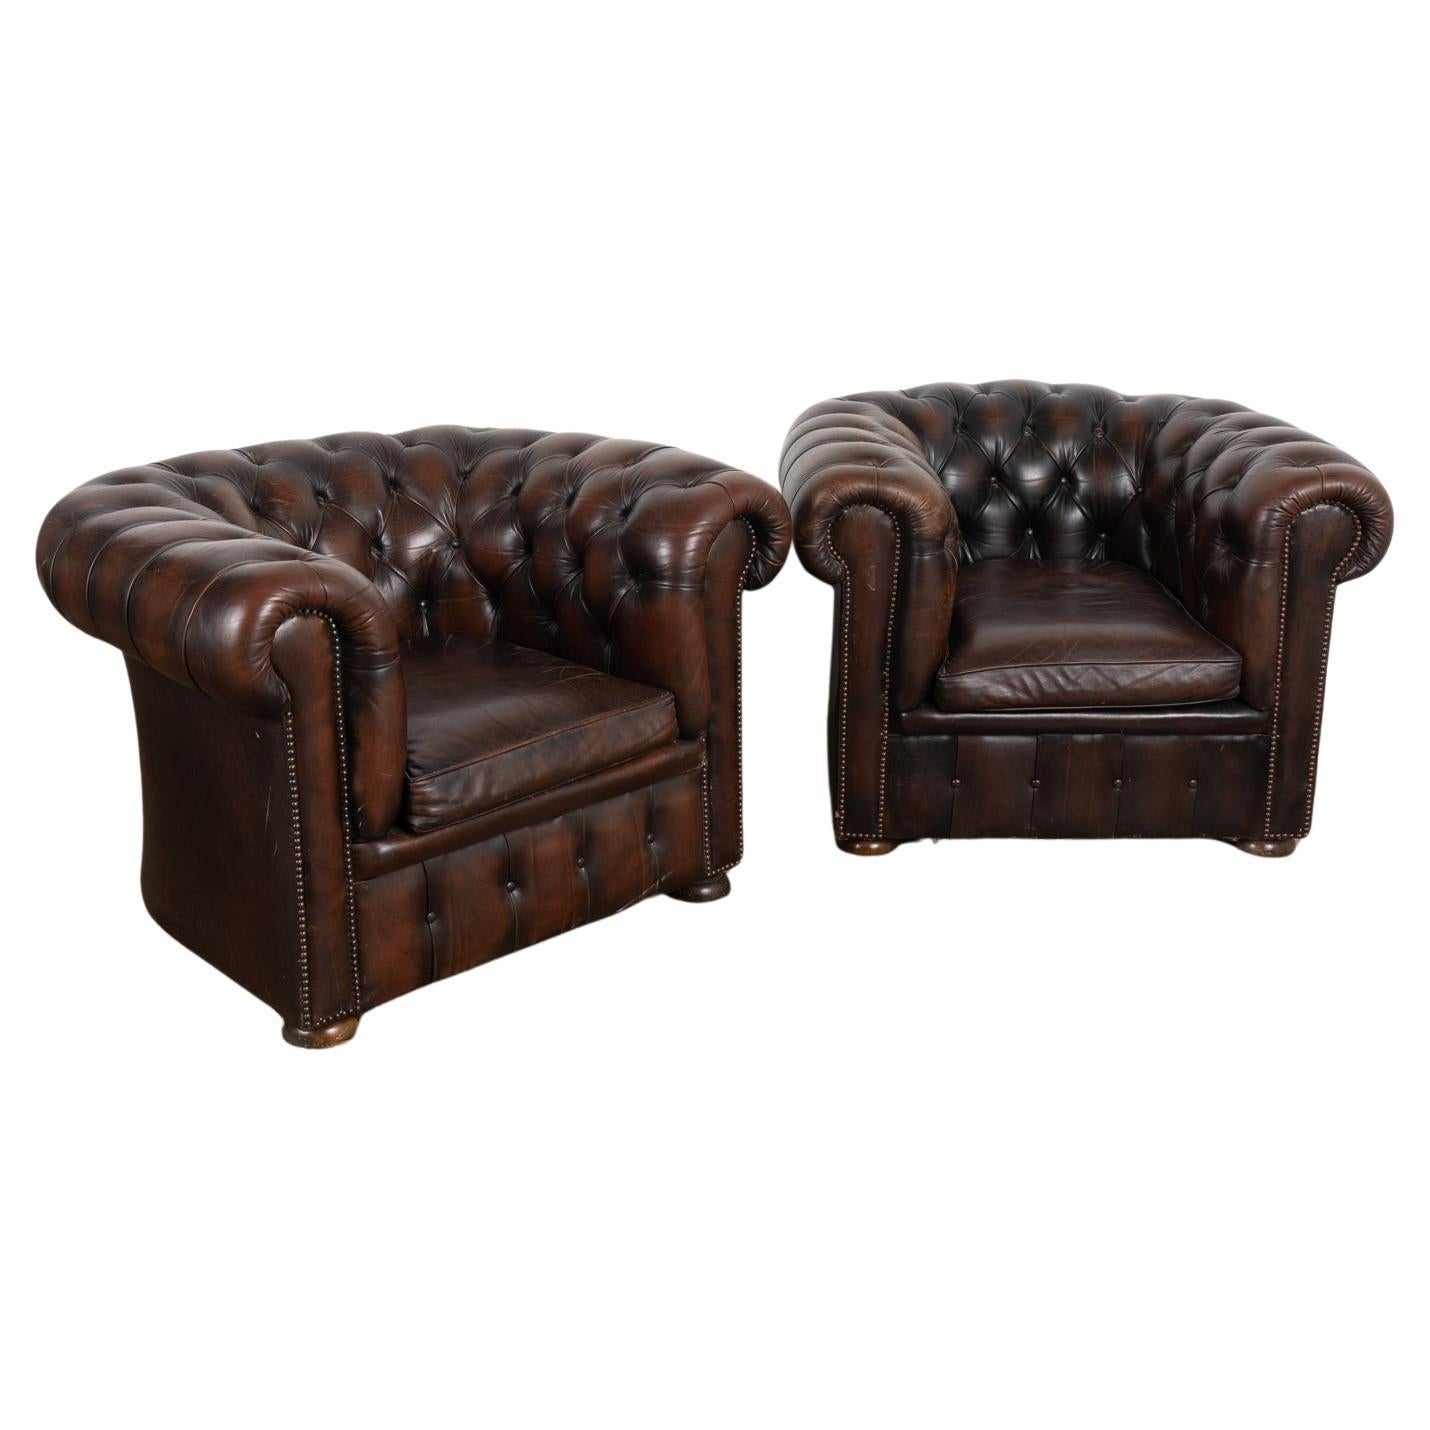 Paar, Chesterfield Brown Leather Armchair Club Chairs, Dänemark um 1940-60 im Angebot